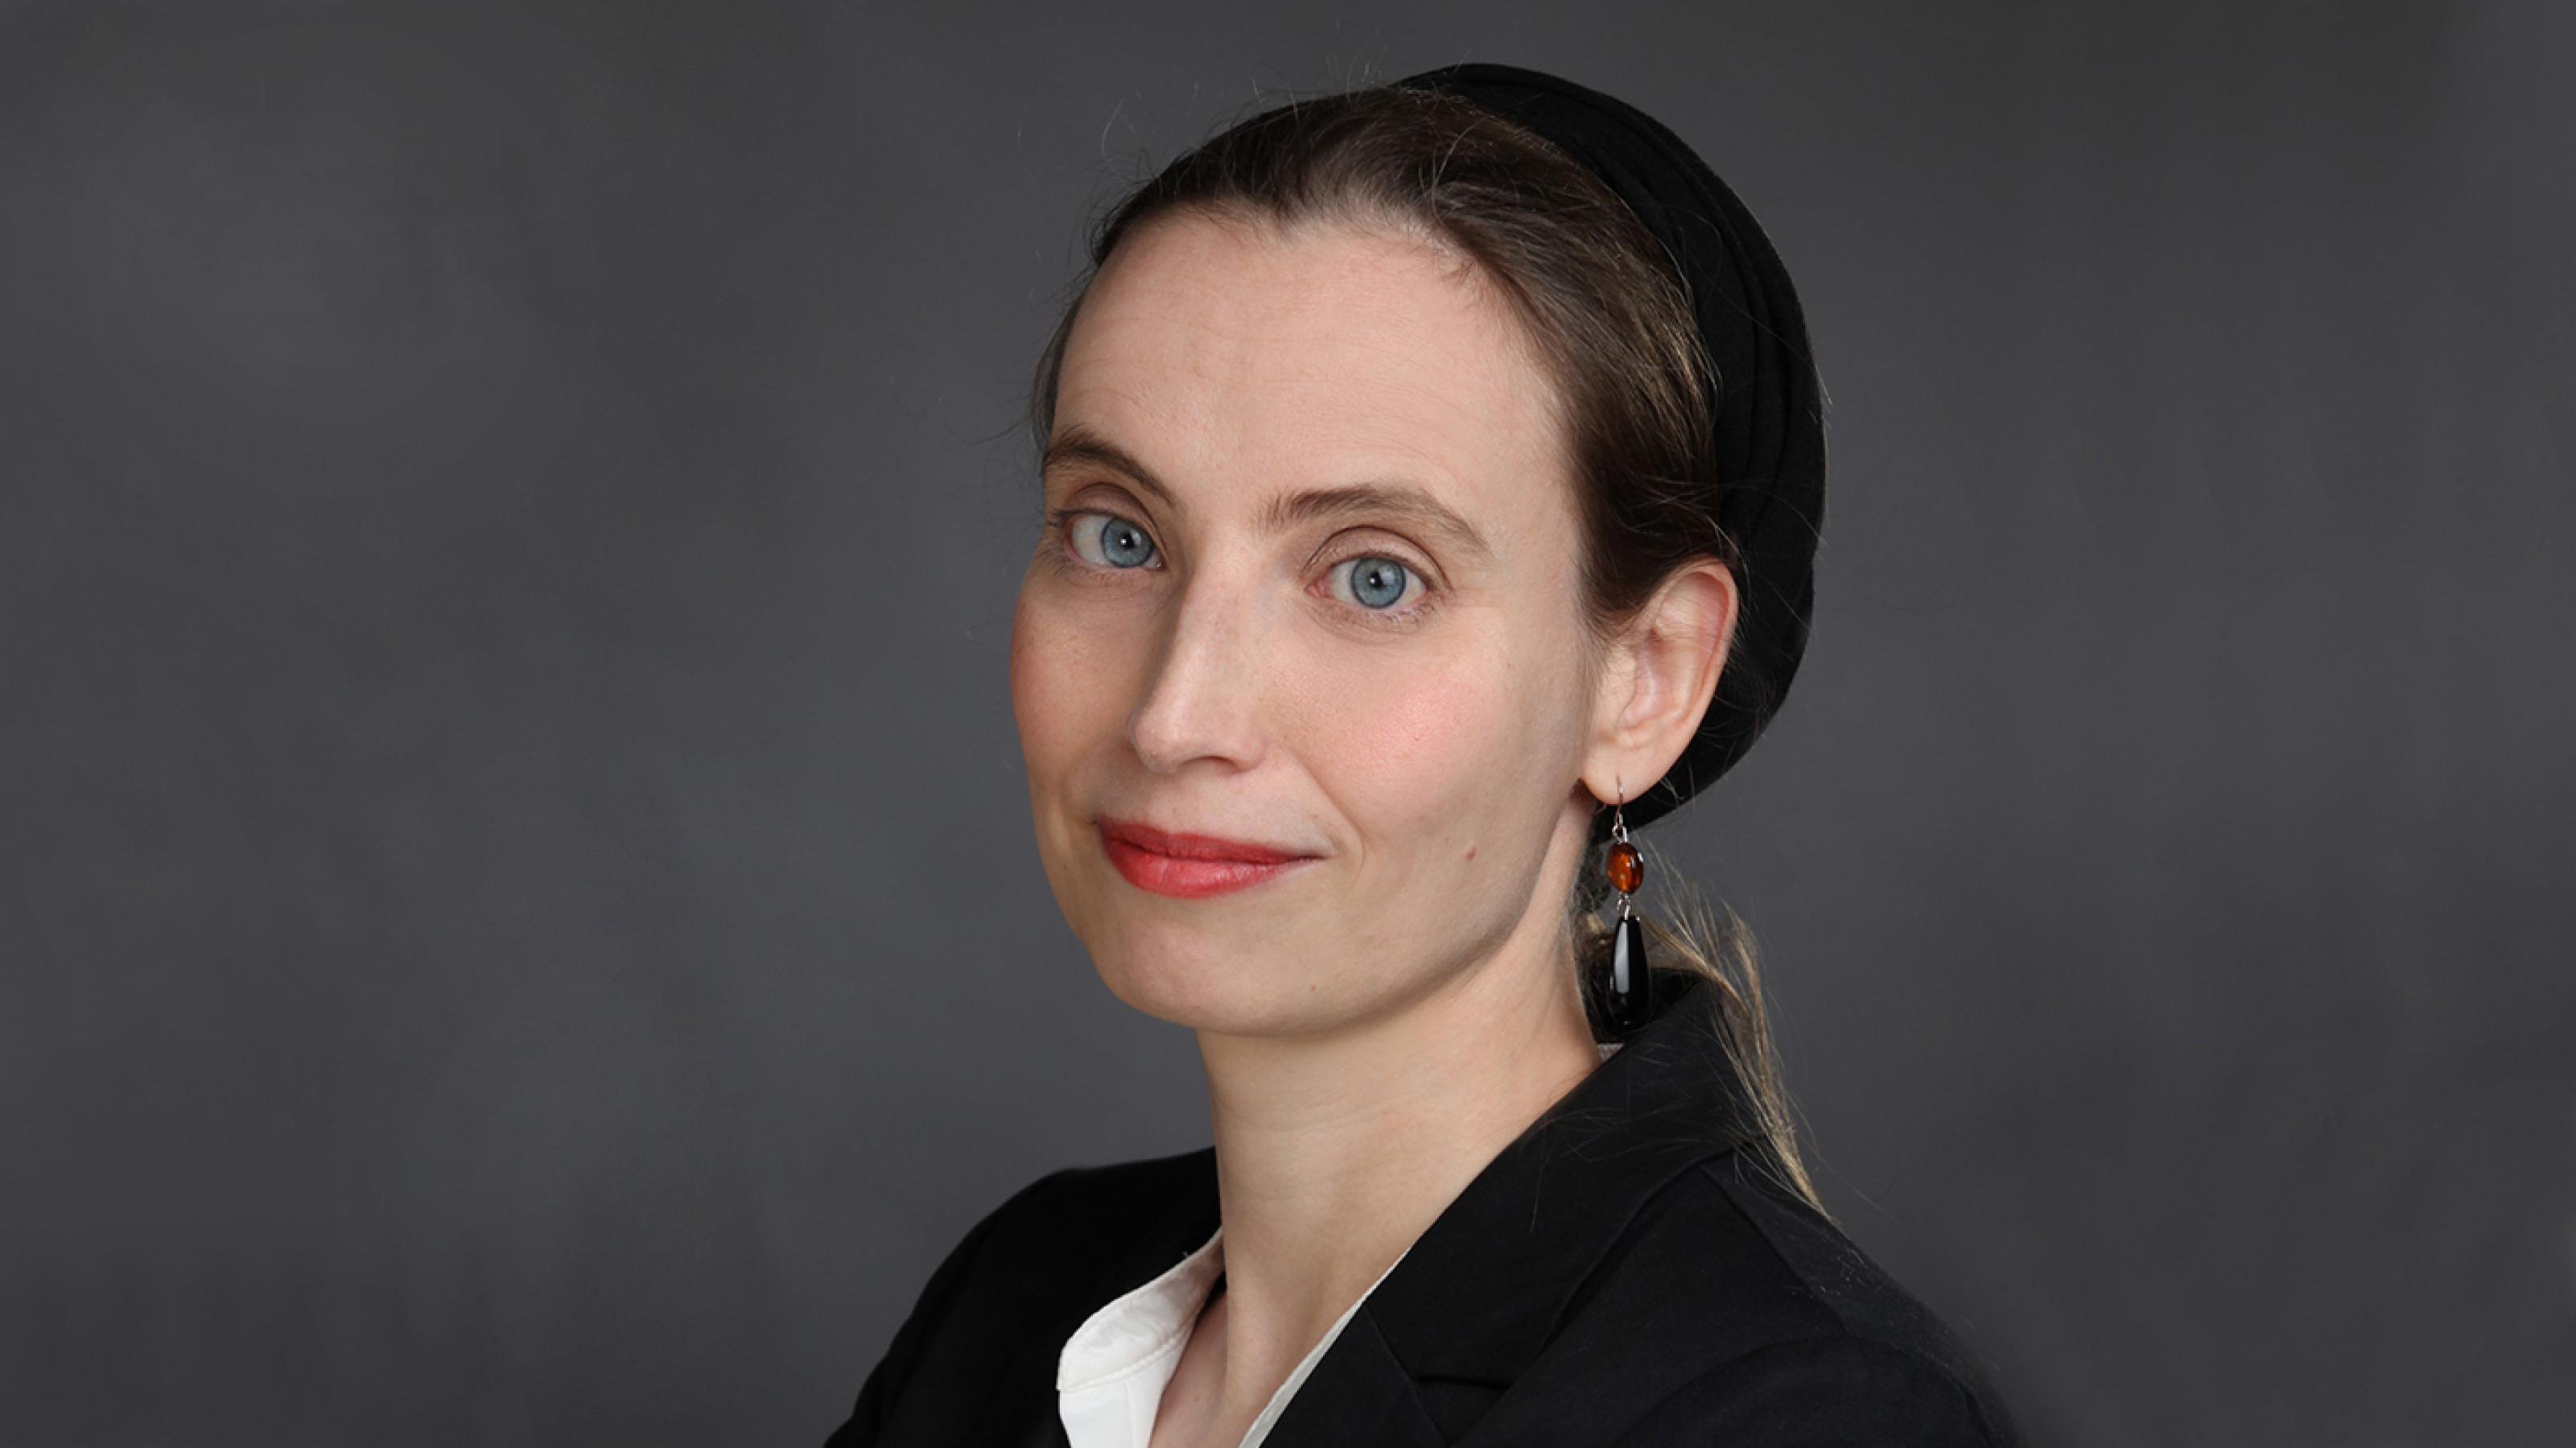 Portraitfoto der RiffReporterin Christiane Enkeler im Halbprofil: blonde Haare, blaue Augen, schwarzes Haarband, tropfenförmiger Ohrring